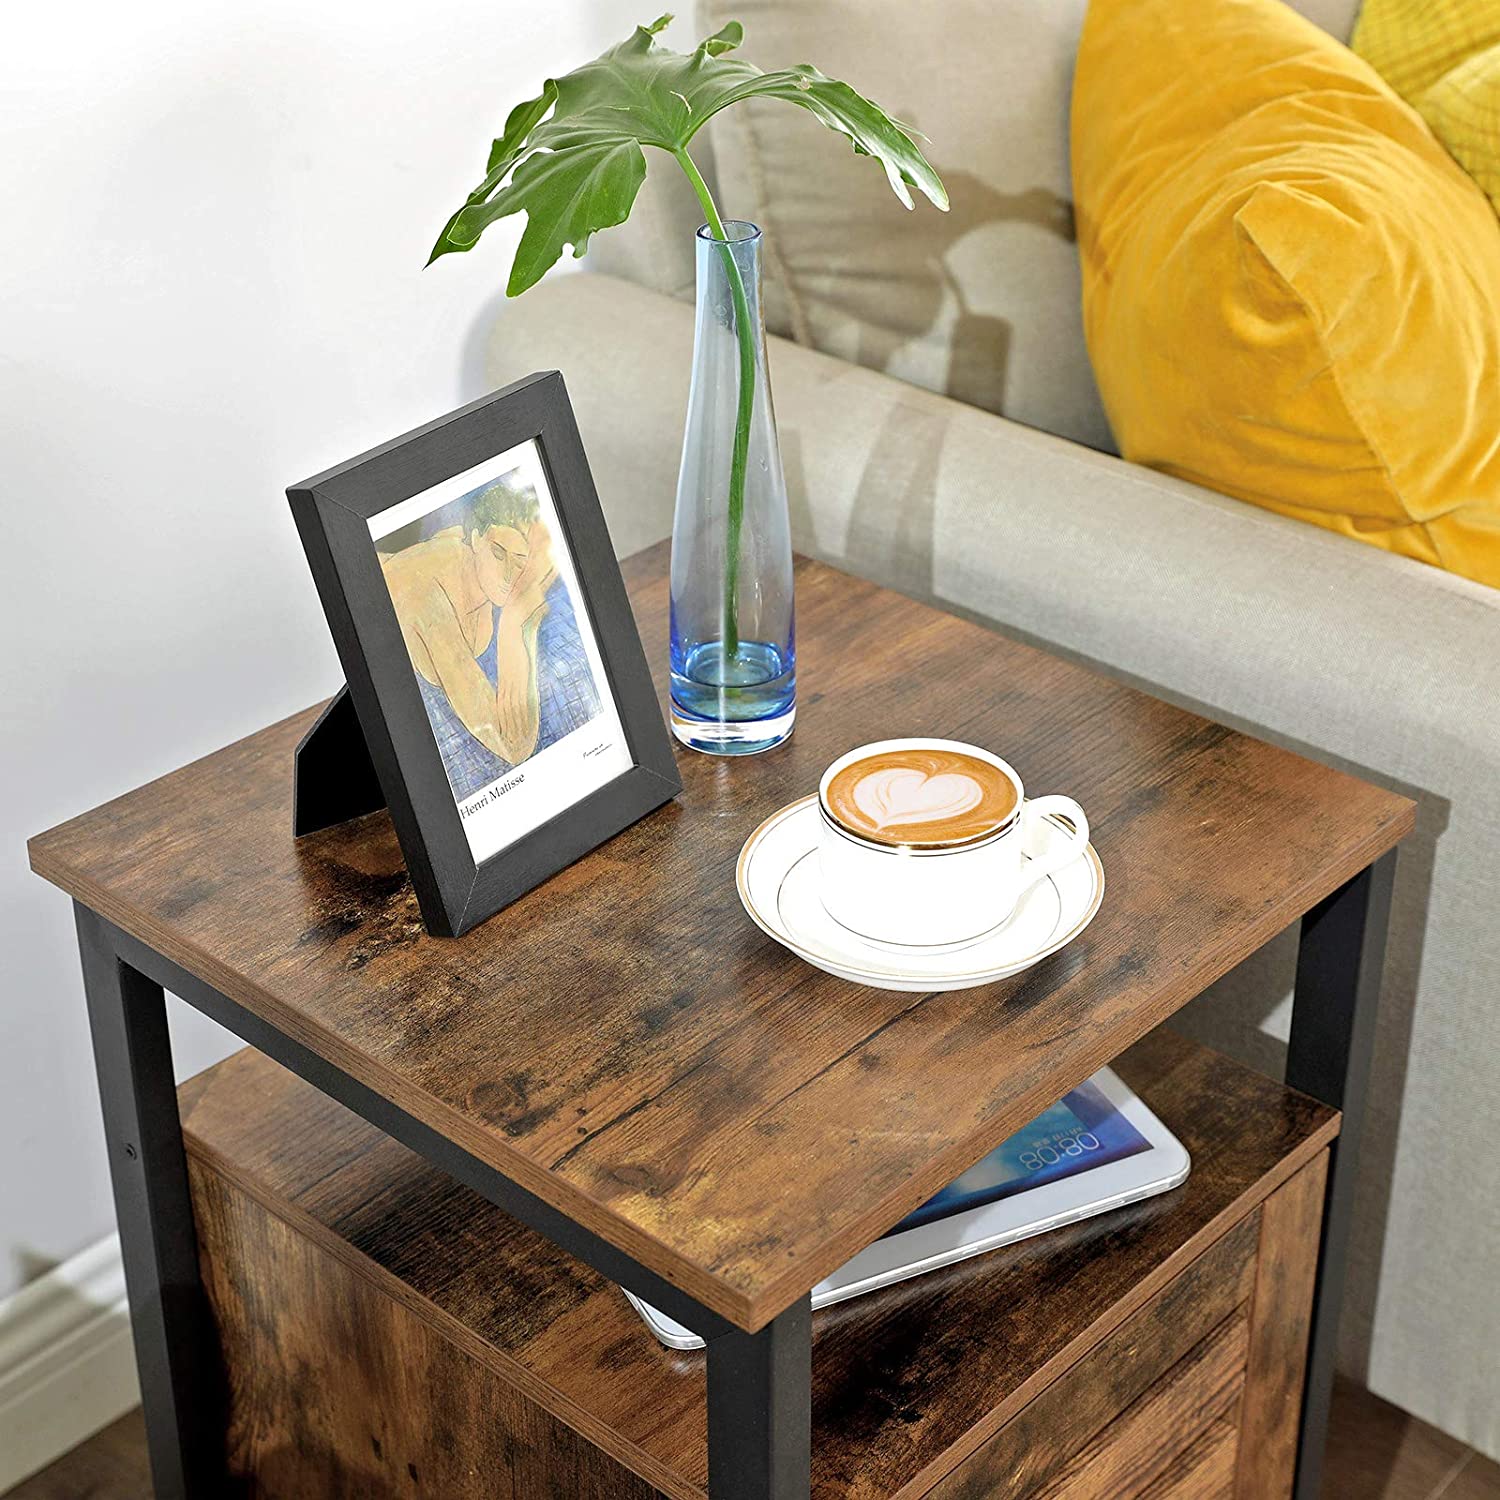 Bedside Table With 2 Adjustable Shelves Steel Frame Rustic Brown And Black